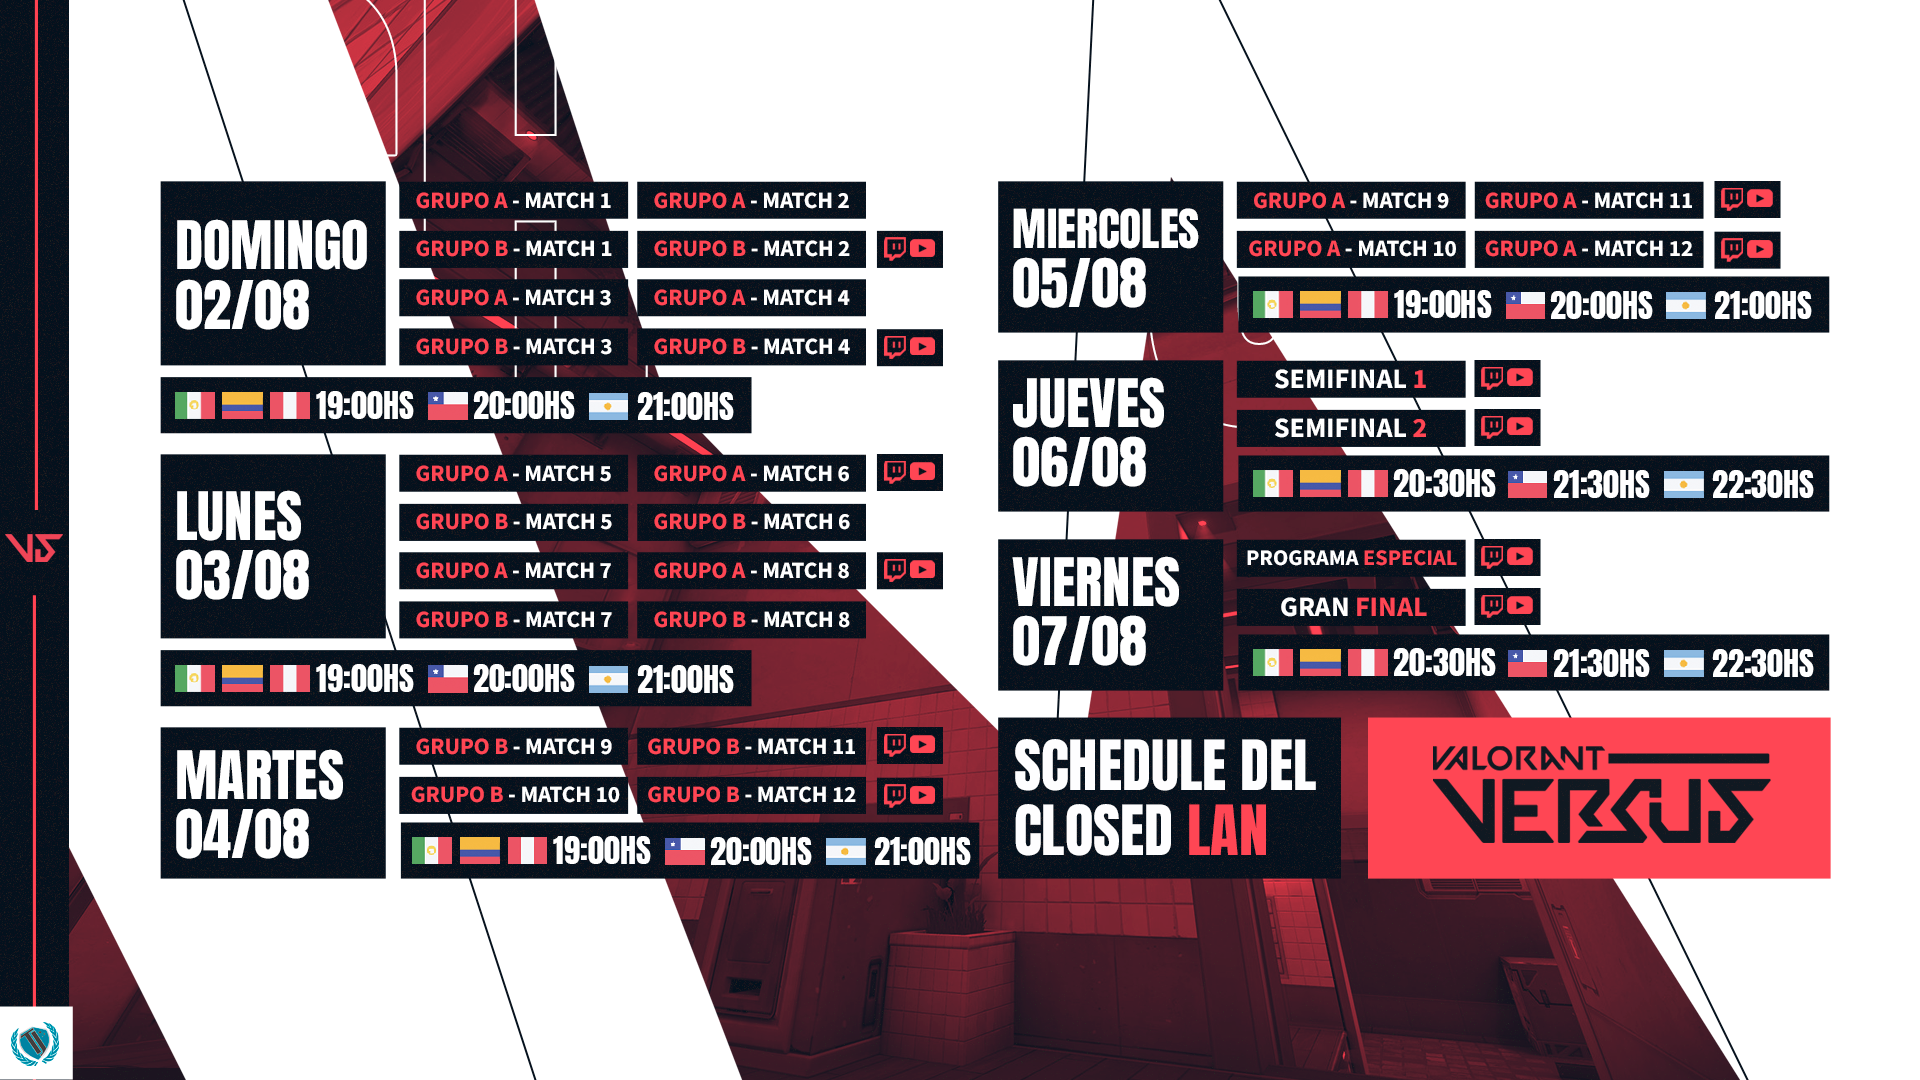 Schedule-del-closed-LAN.png